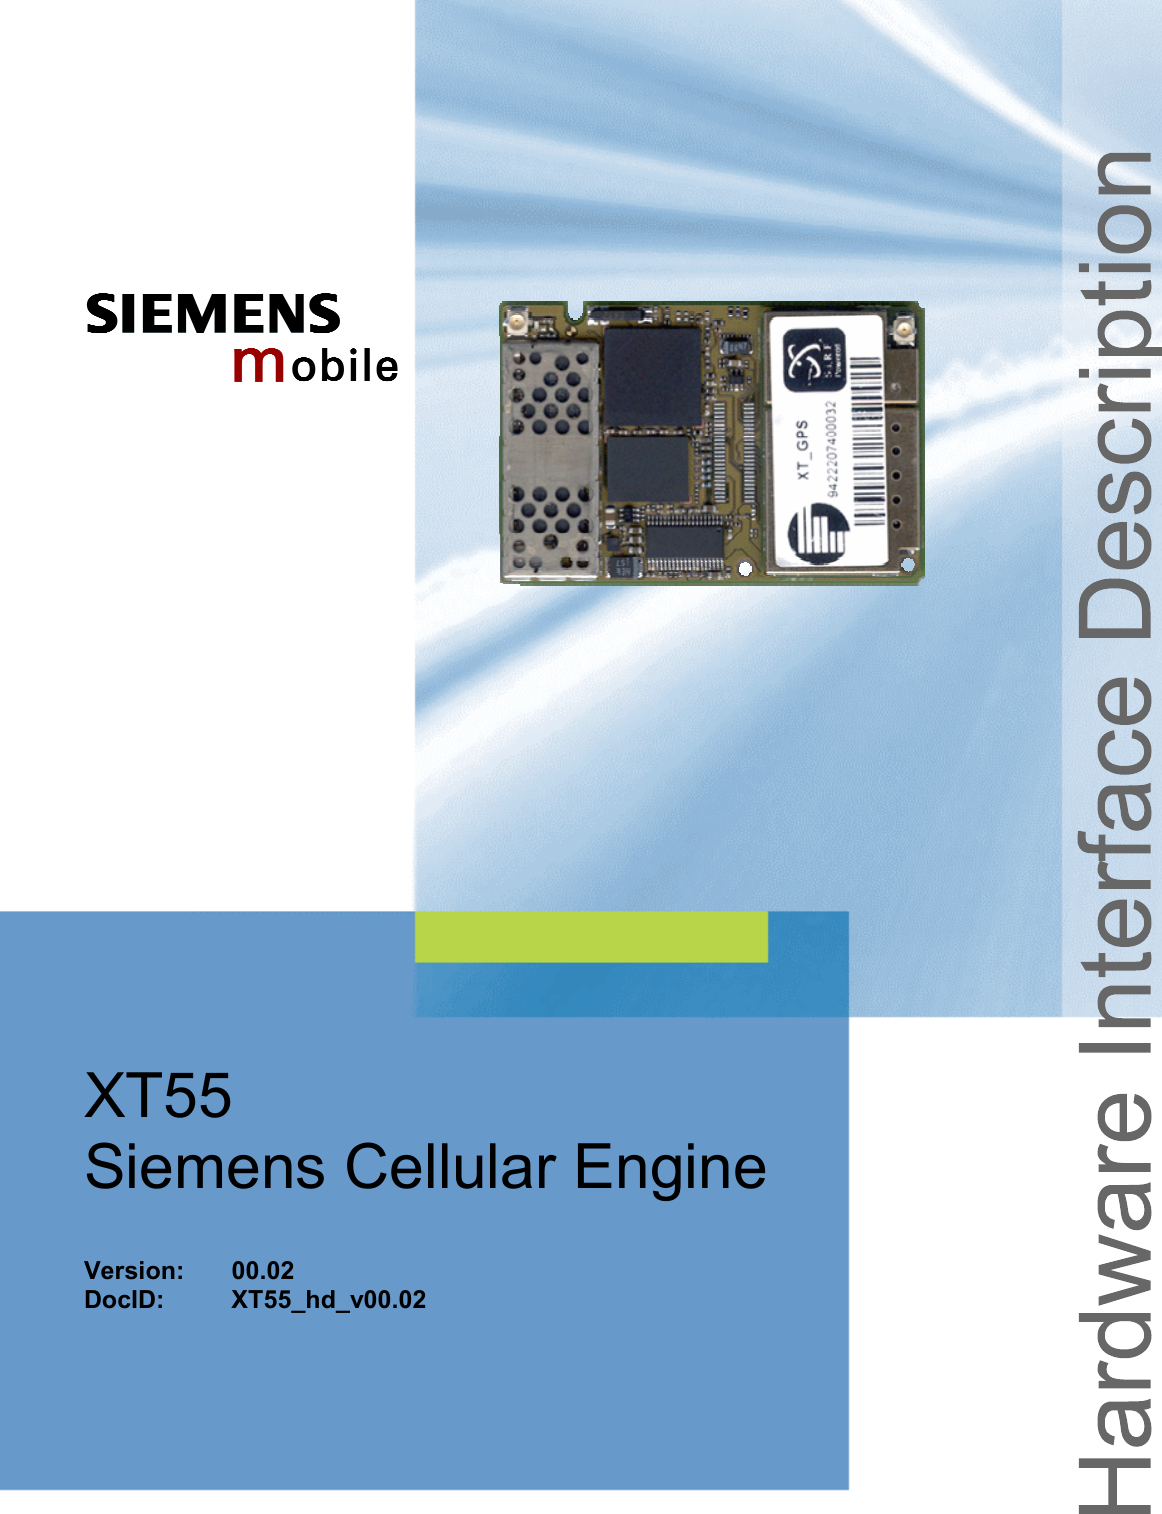 XT55 Hardware Interface Description Confidential / Preliminary s mo b i l e XT55_hd_v00.02  Page 1 of 116  15.03.2004  XT55 Siemens Cellular Engine   Version: 00.02 DocID: XT55_hd_v00.02 